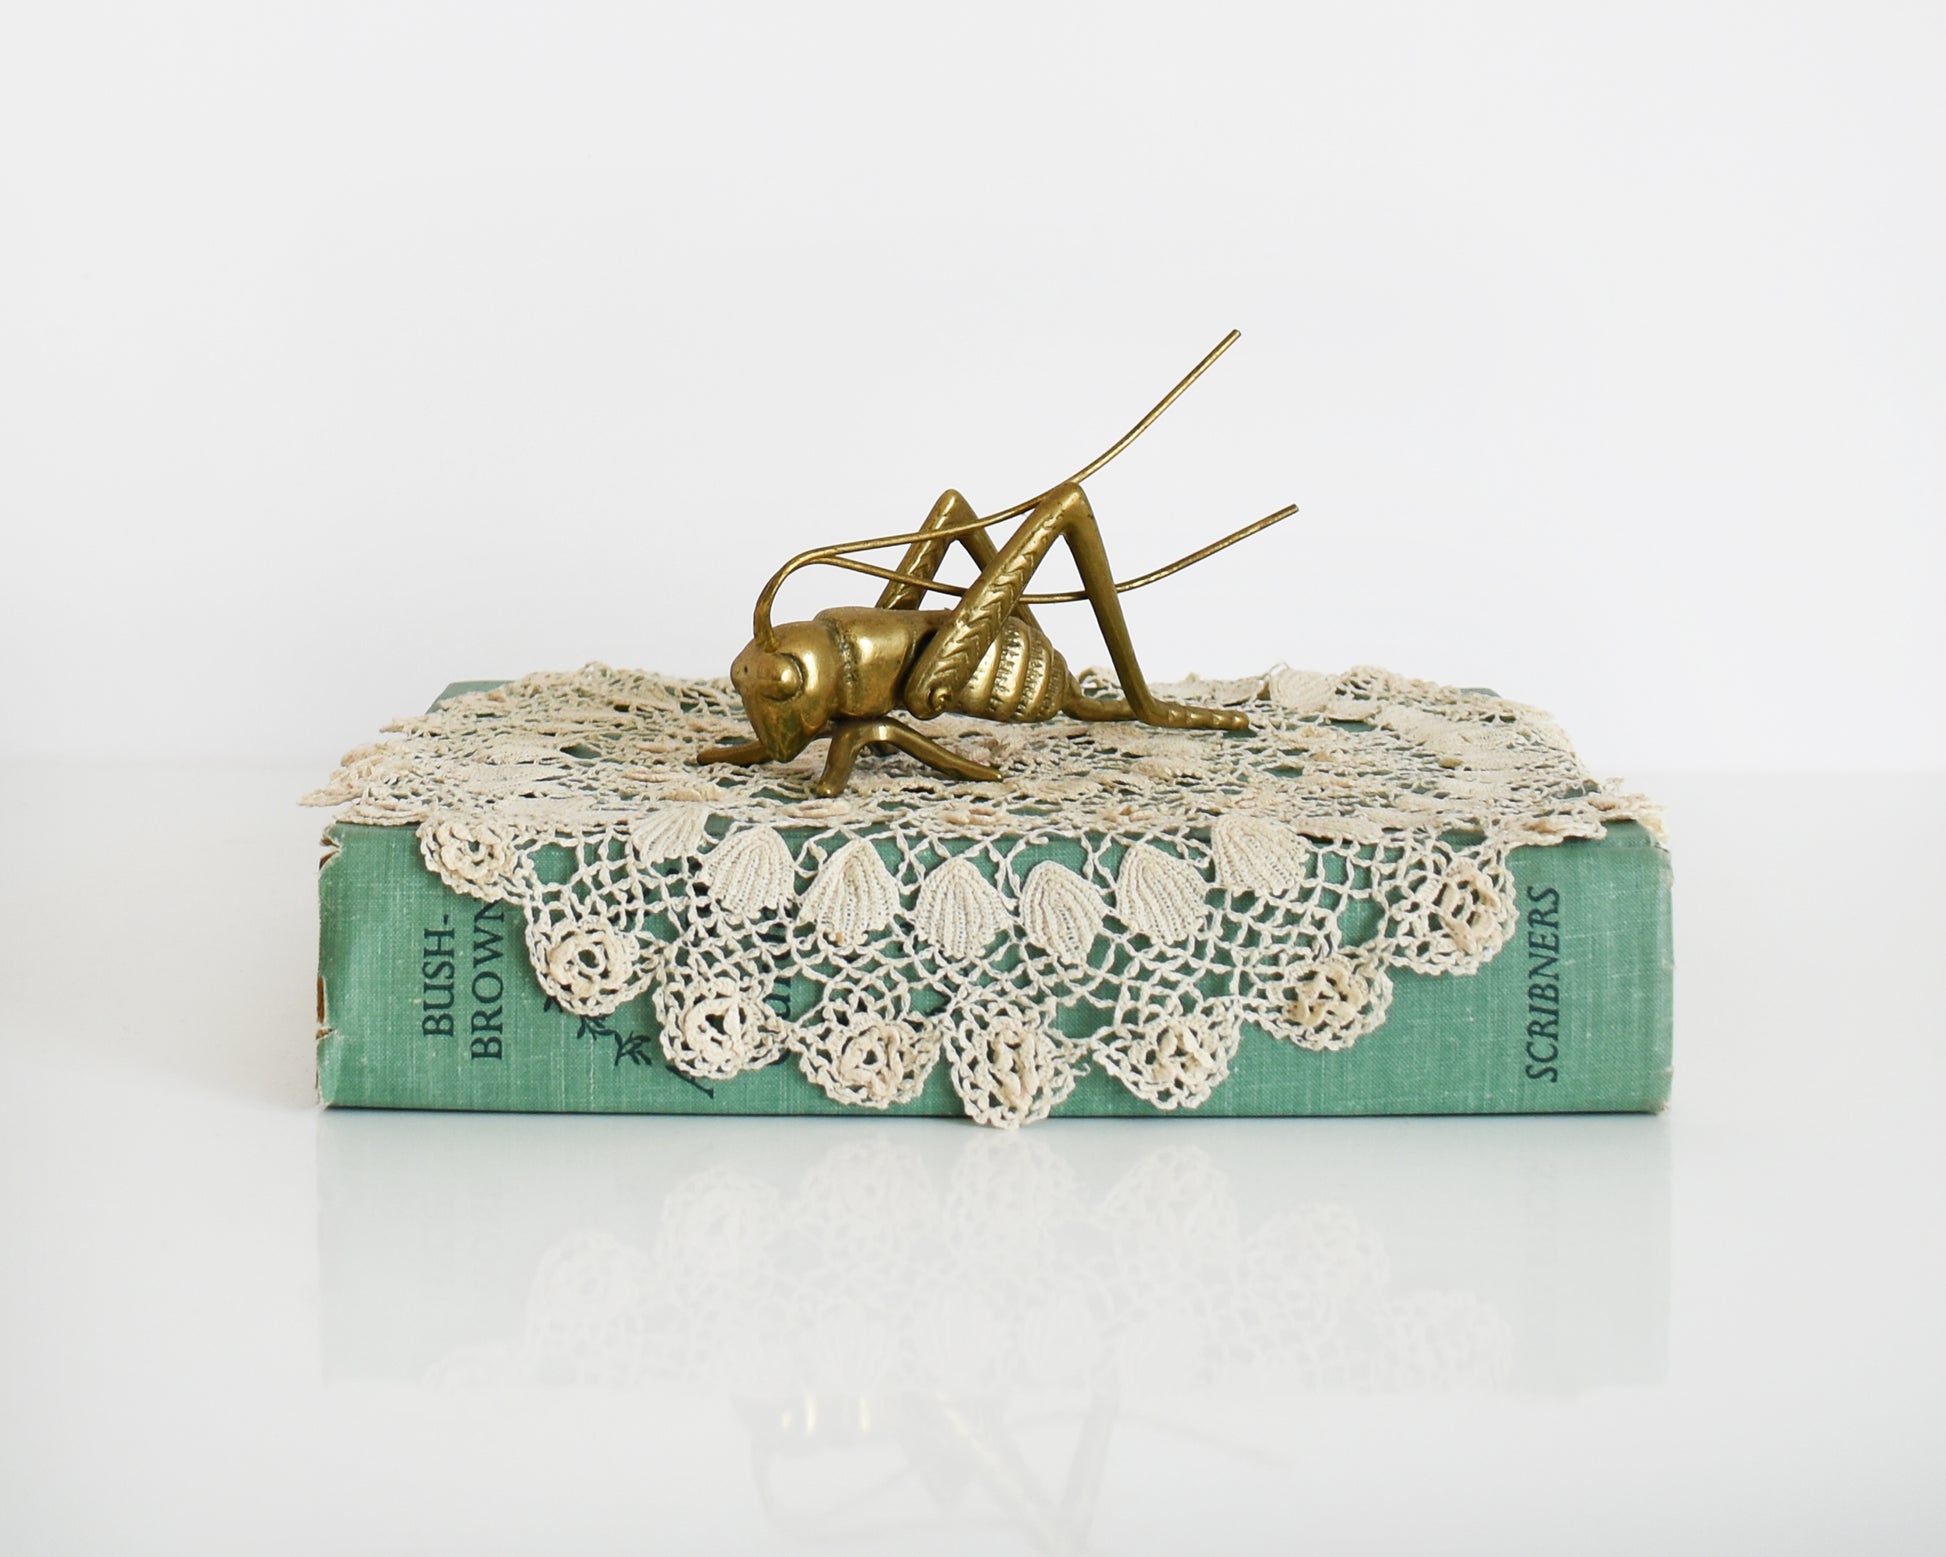 A vintage brass grasshopper/cricket on a lace doily on a green book.